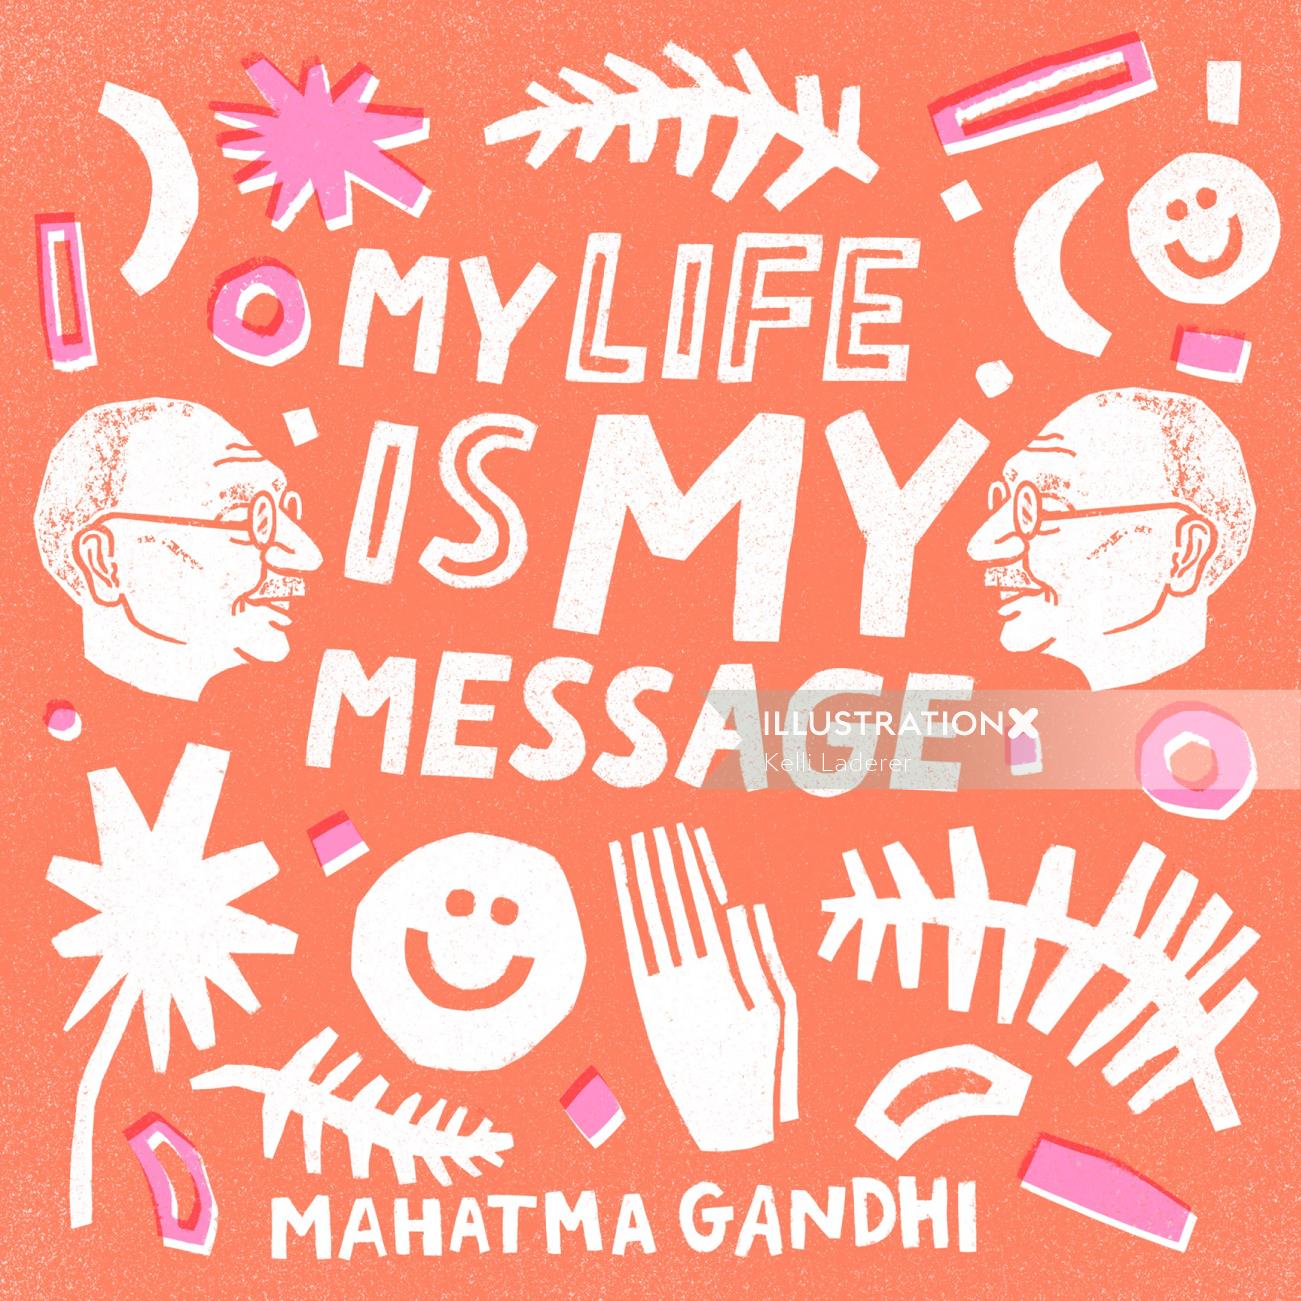 Love my life Mahatma Gandhi cita diseñada por Kelli Laderer